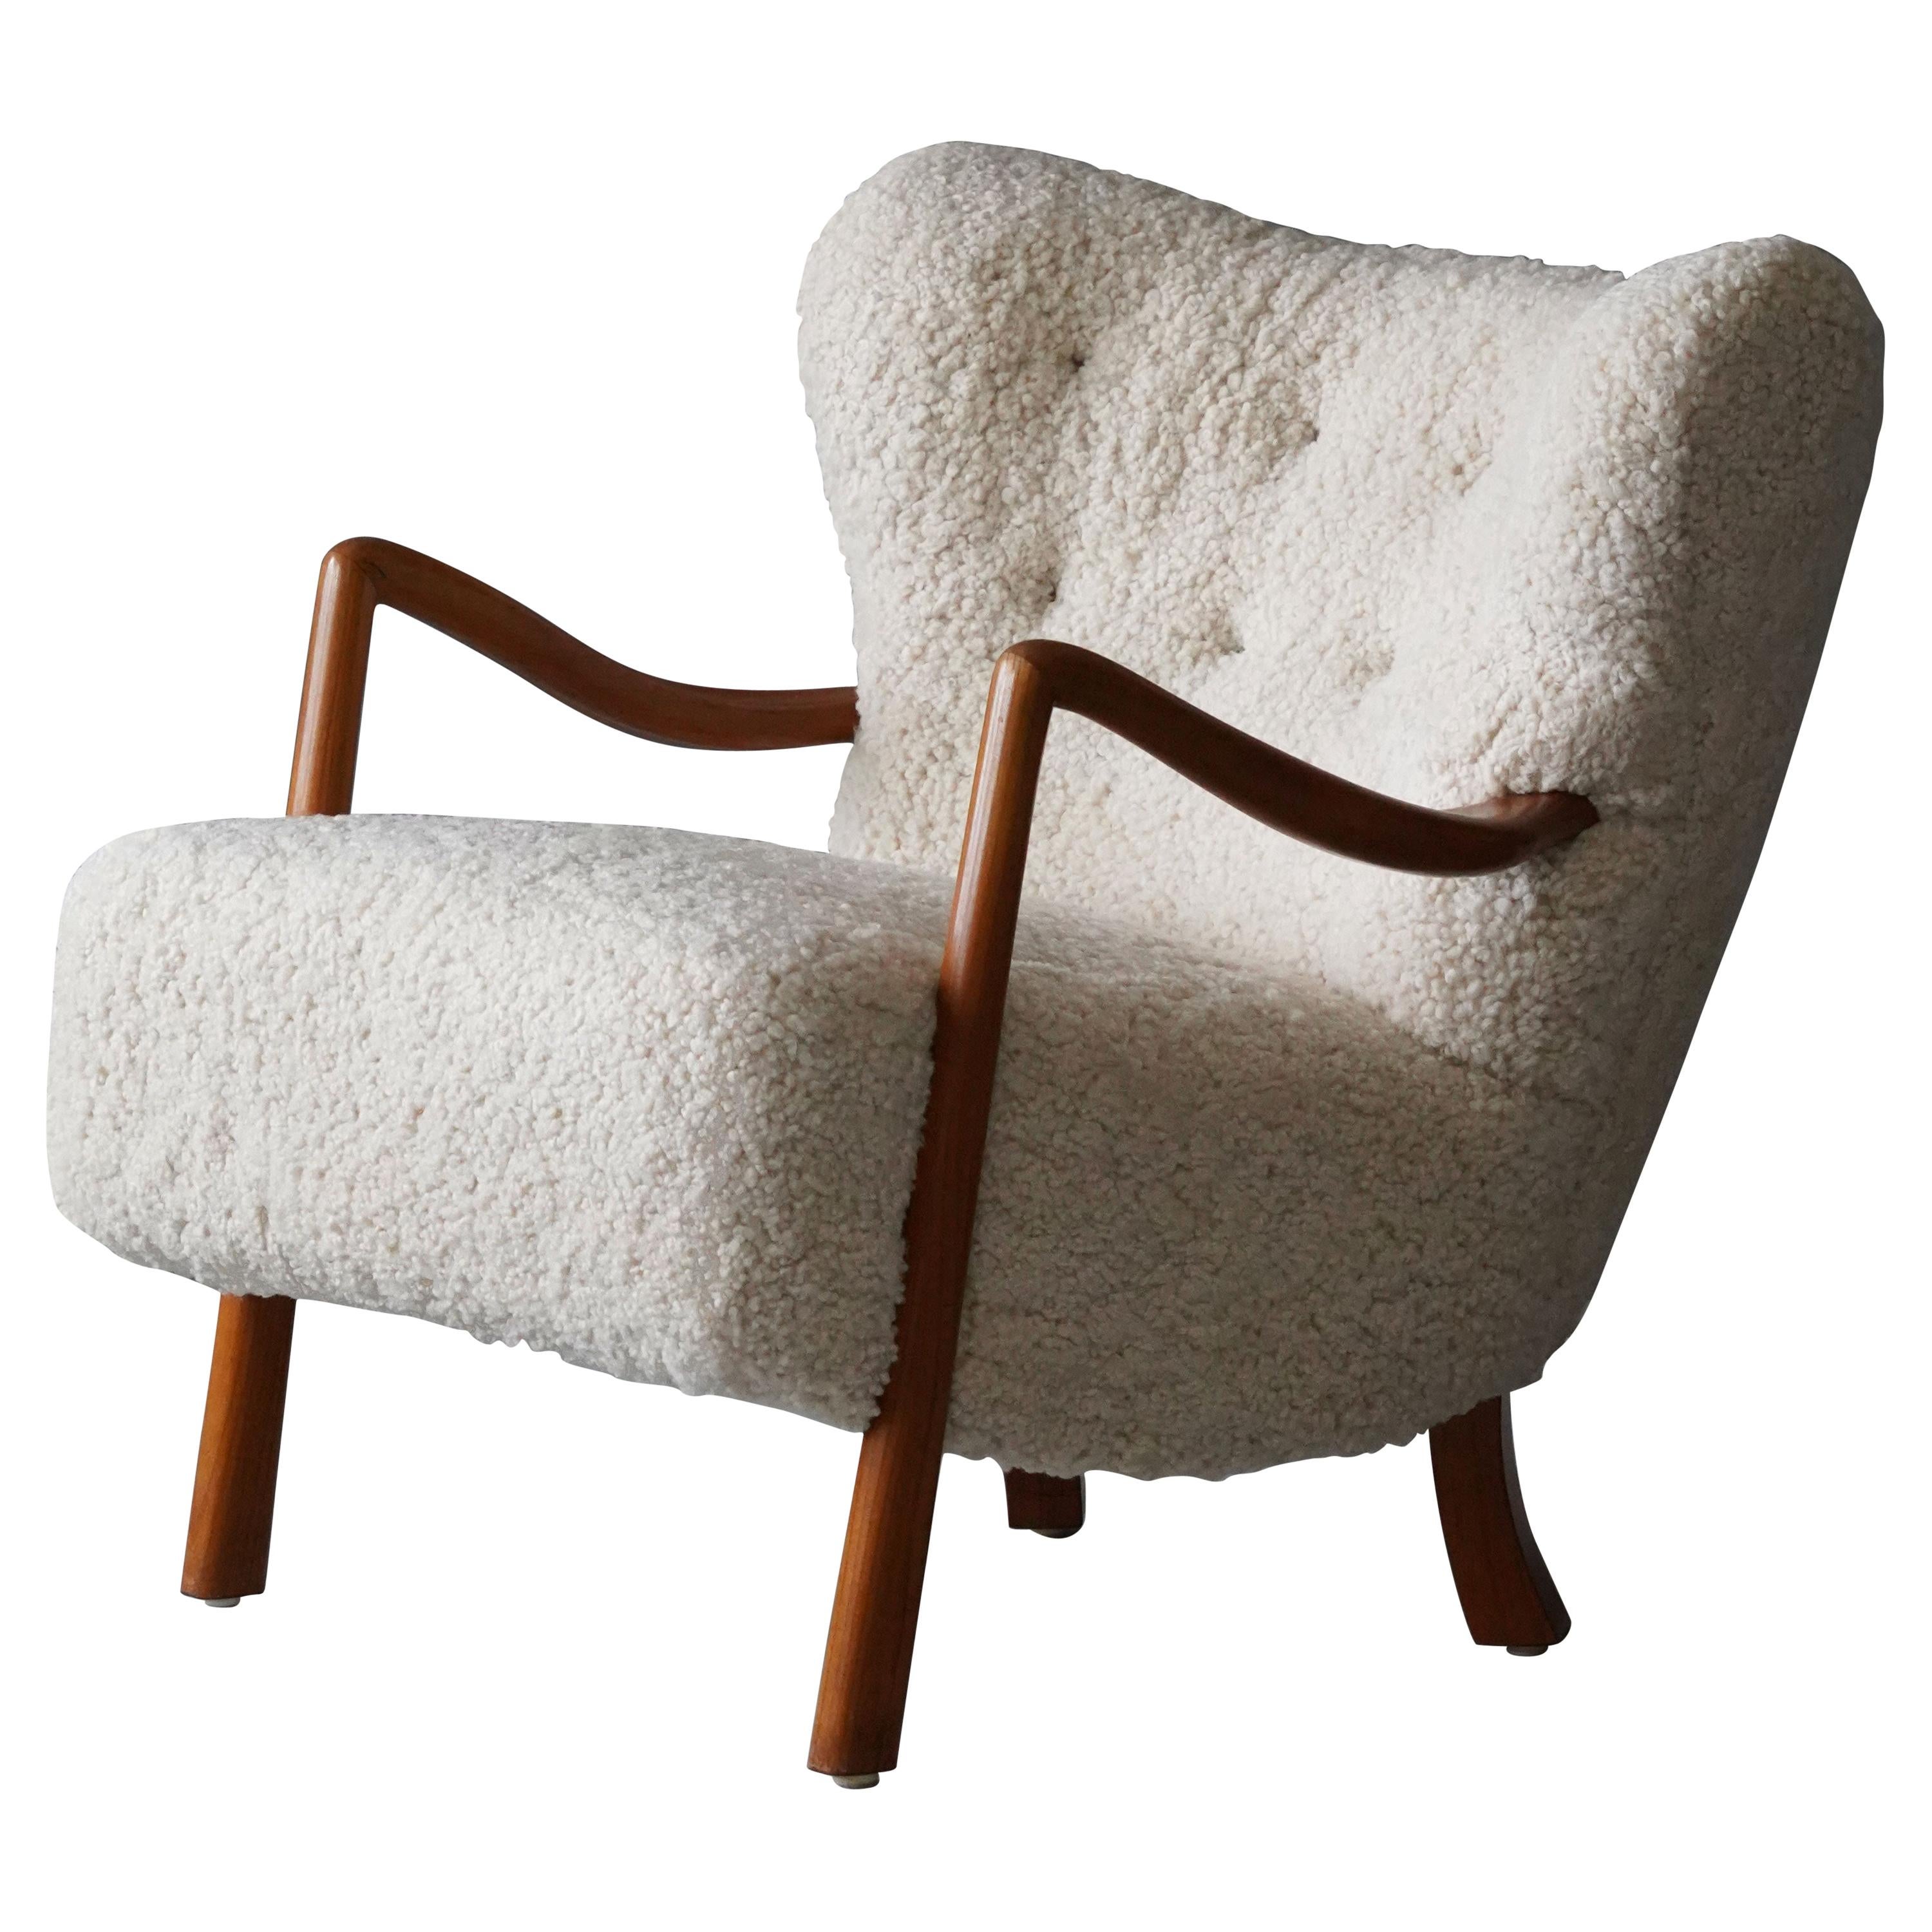 Viggo Boesen ‘Attributed’ Lounge Chair, Stained Beech, Sheepskin, Denmark, 1940s